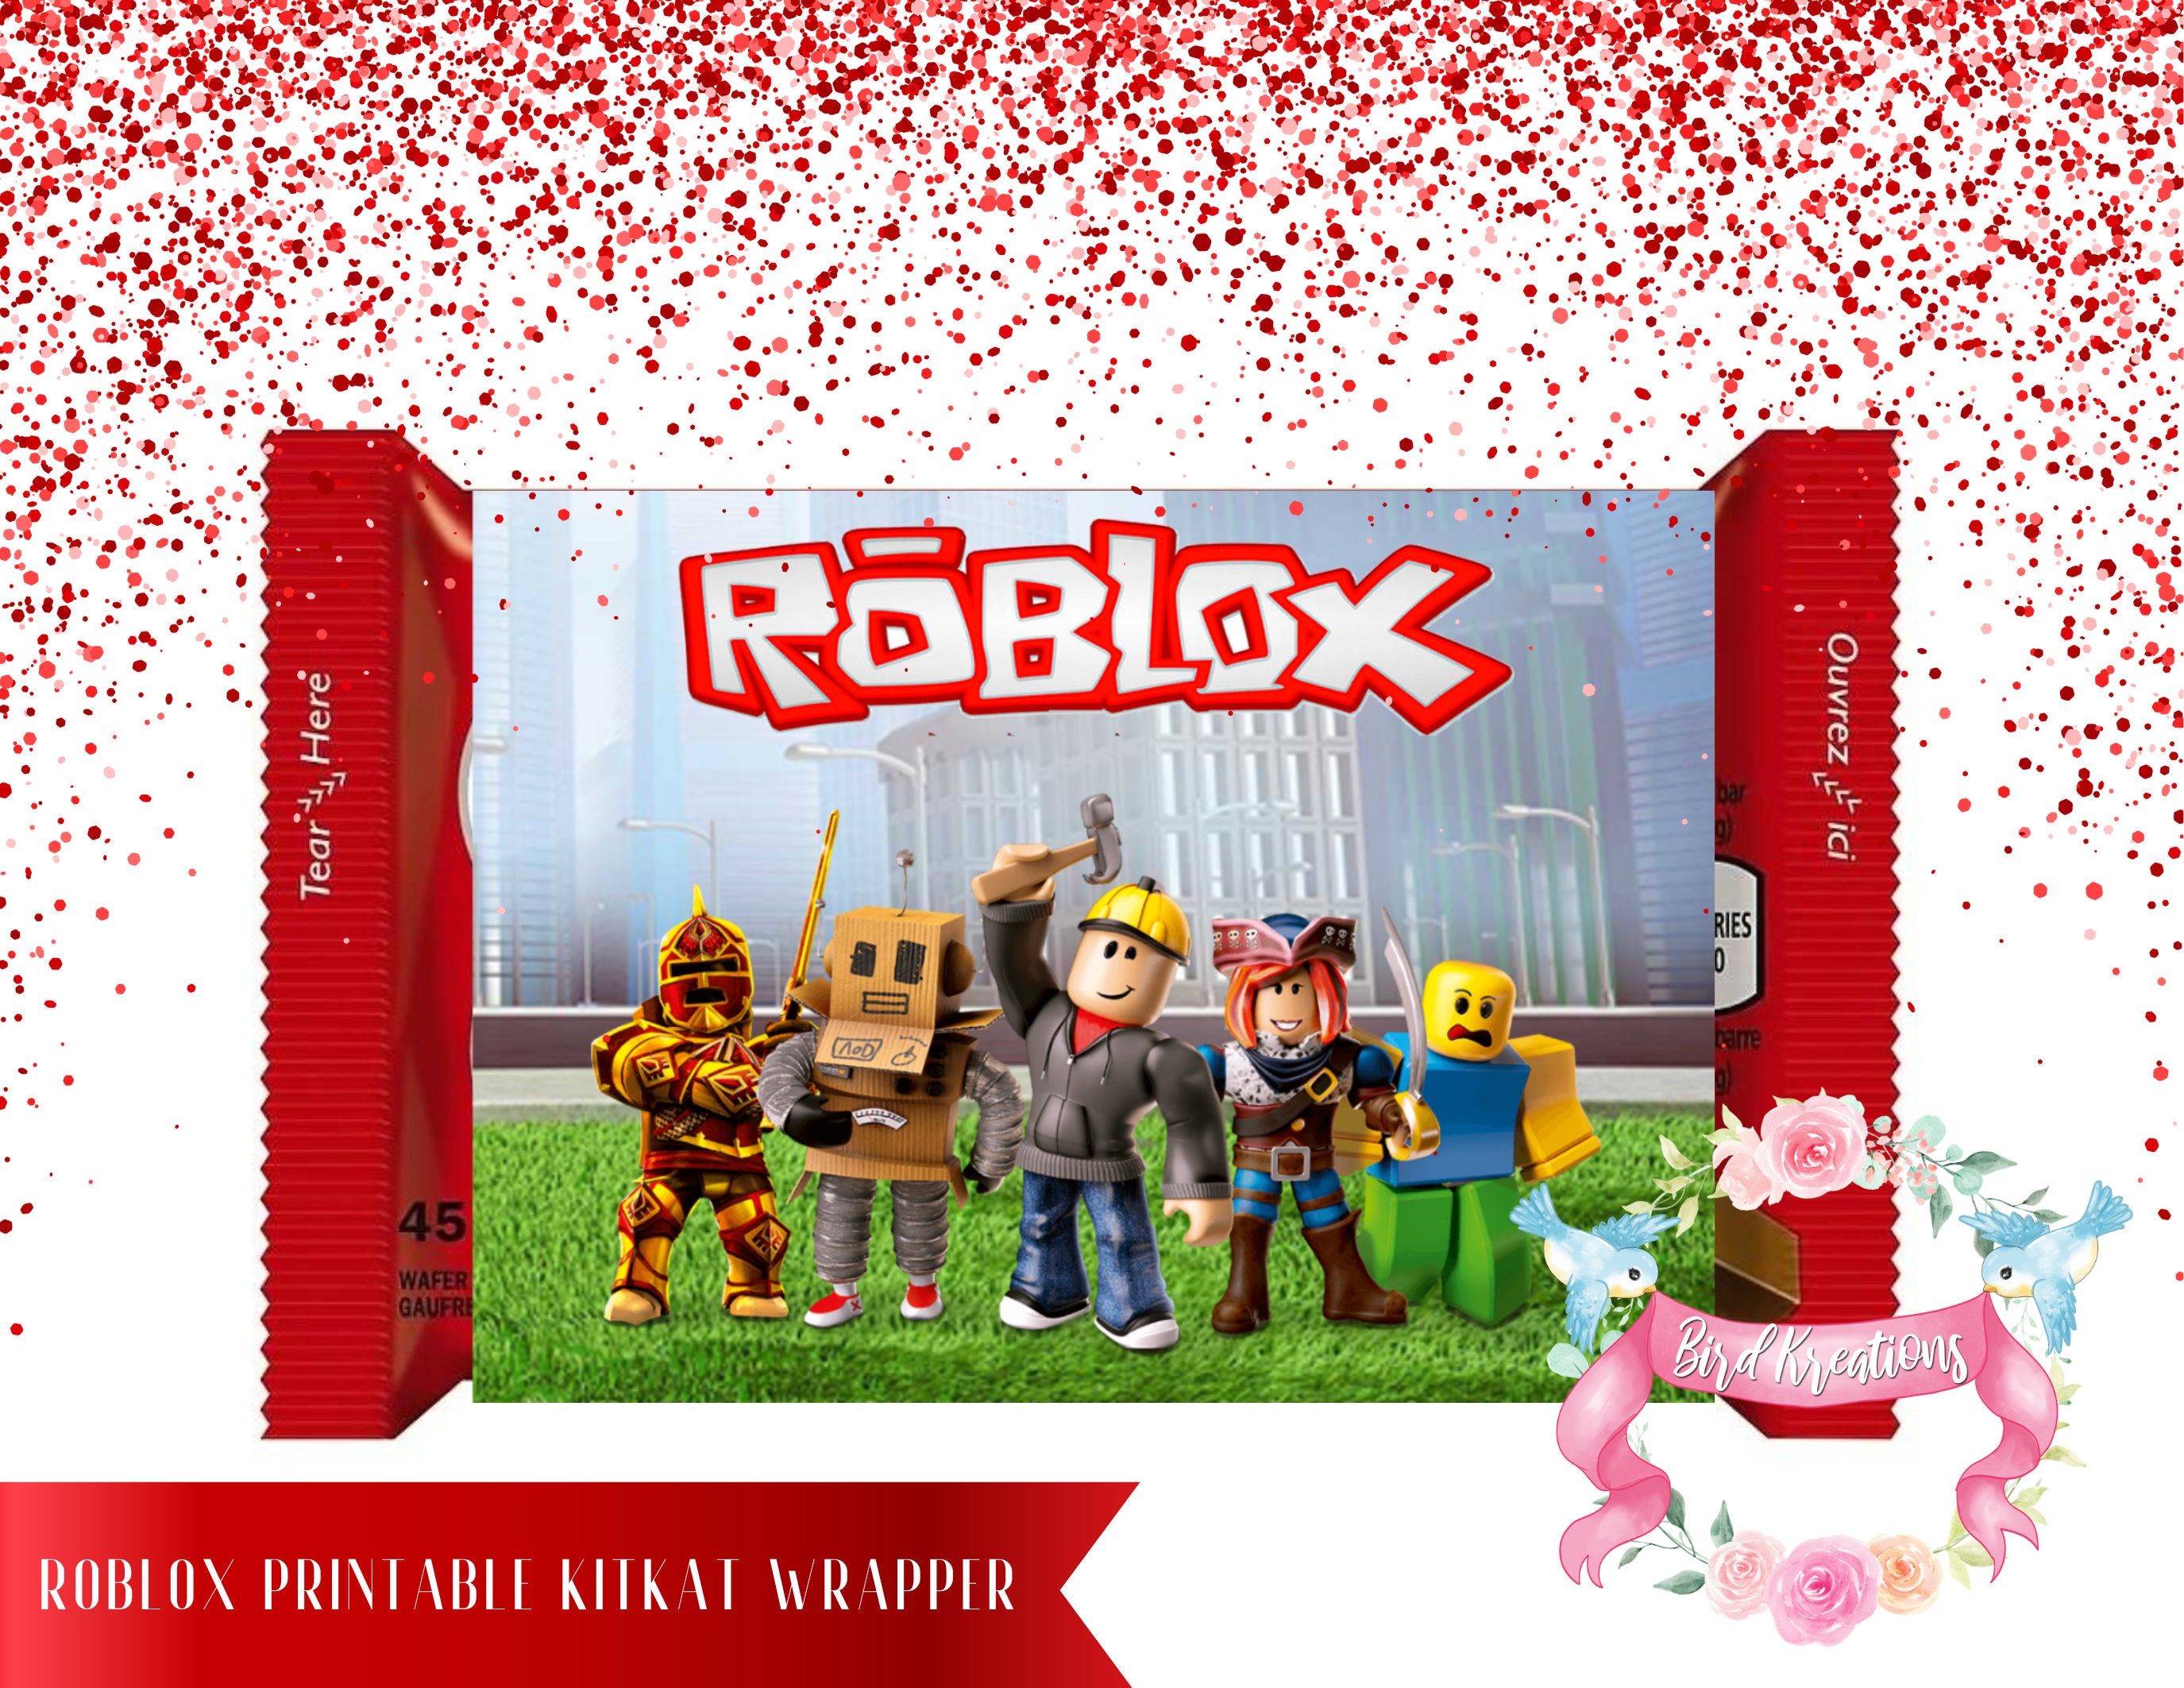 Roblox - Como obter Robux de graça - Critical Hits